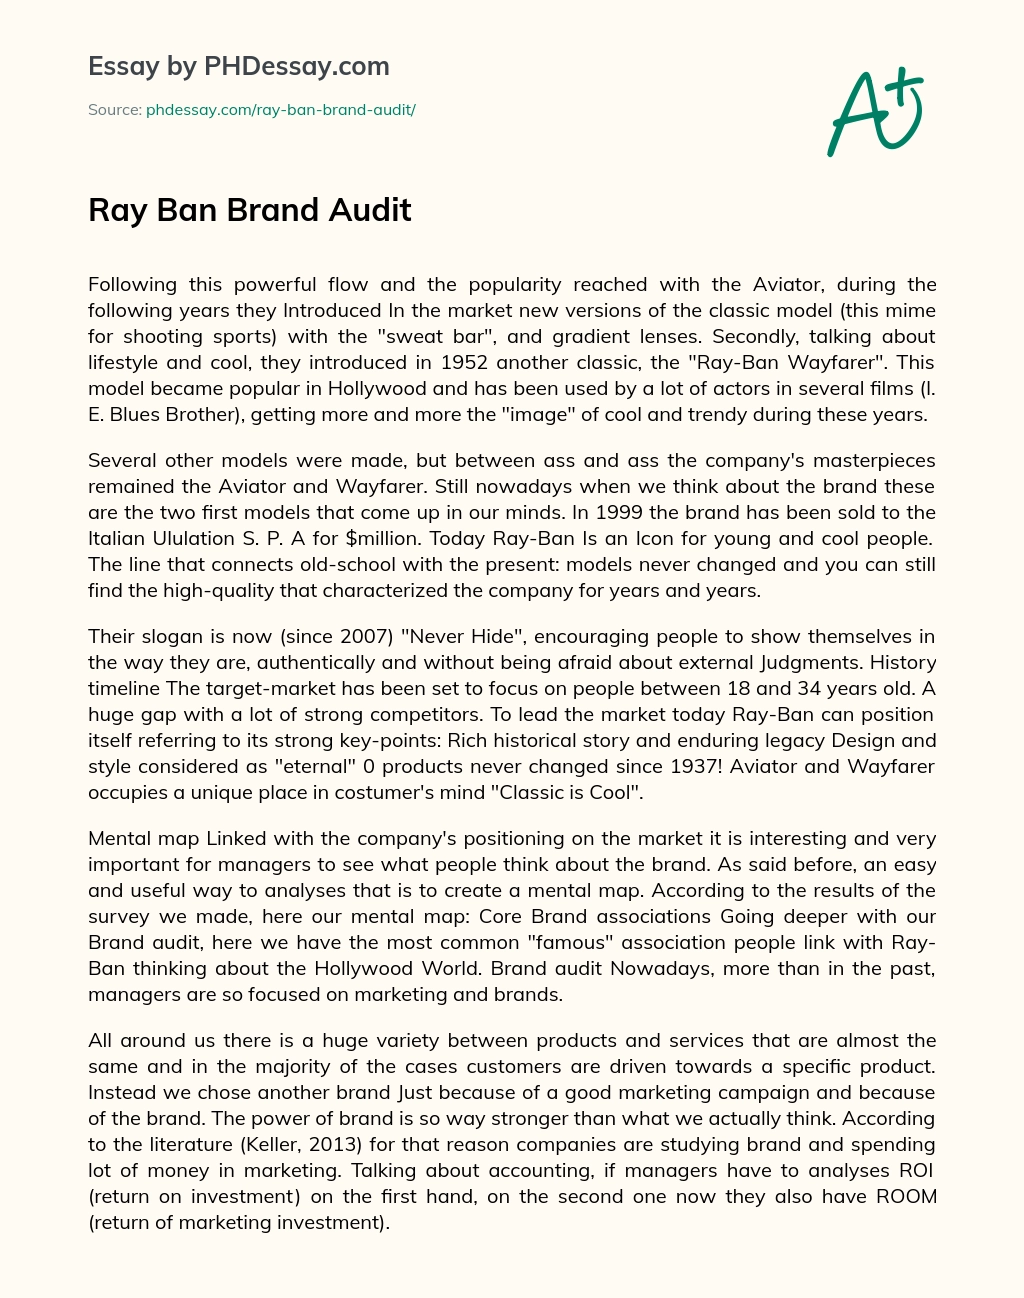 Ray Ban Brand Audit essay